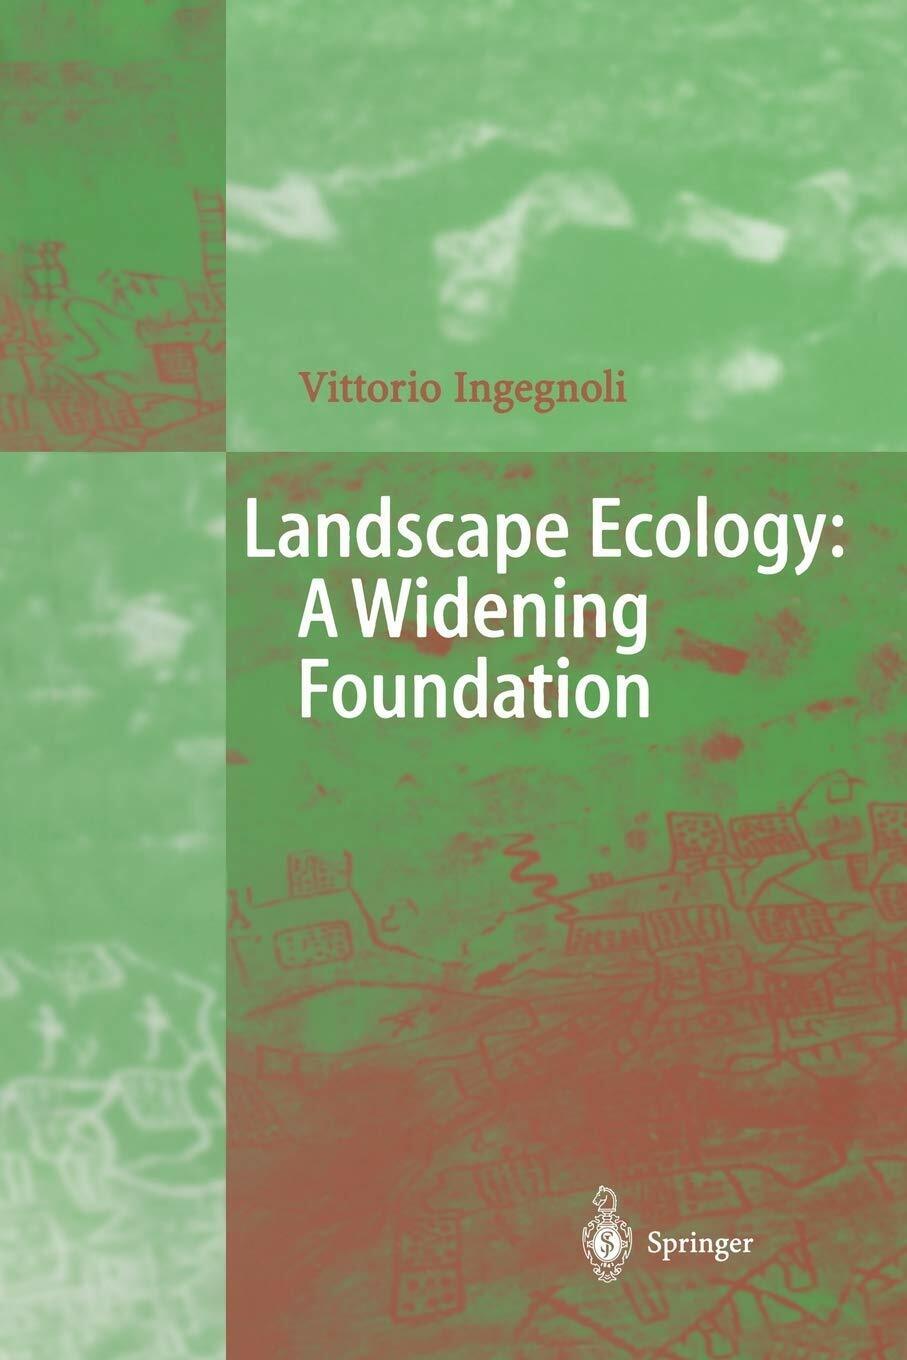 Landscape Ecology: A Widening Foundation - Vittorio Ingegnoli  - Springer, 2011